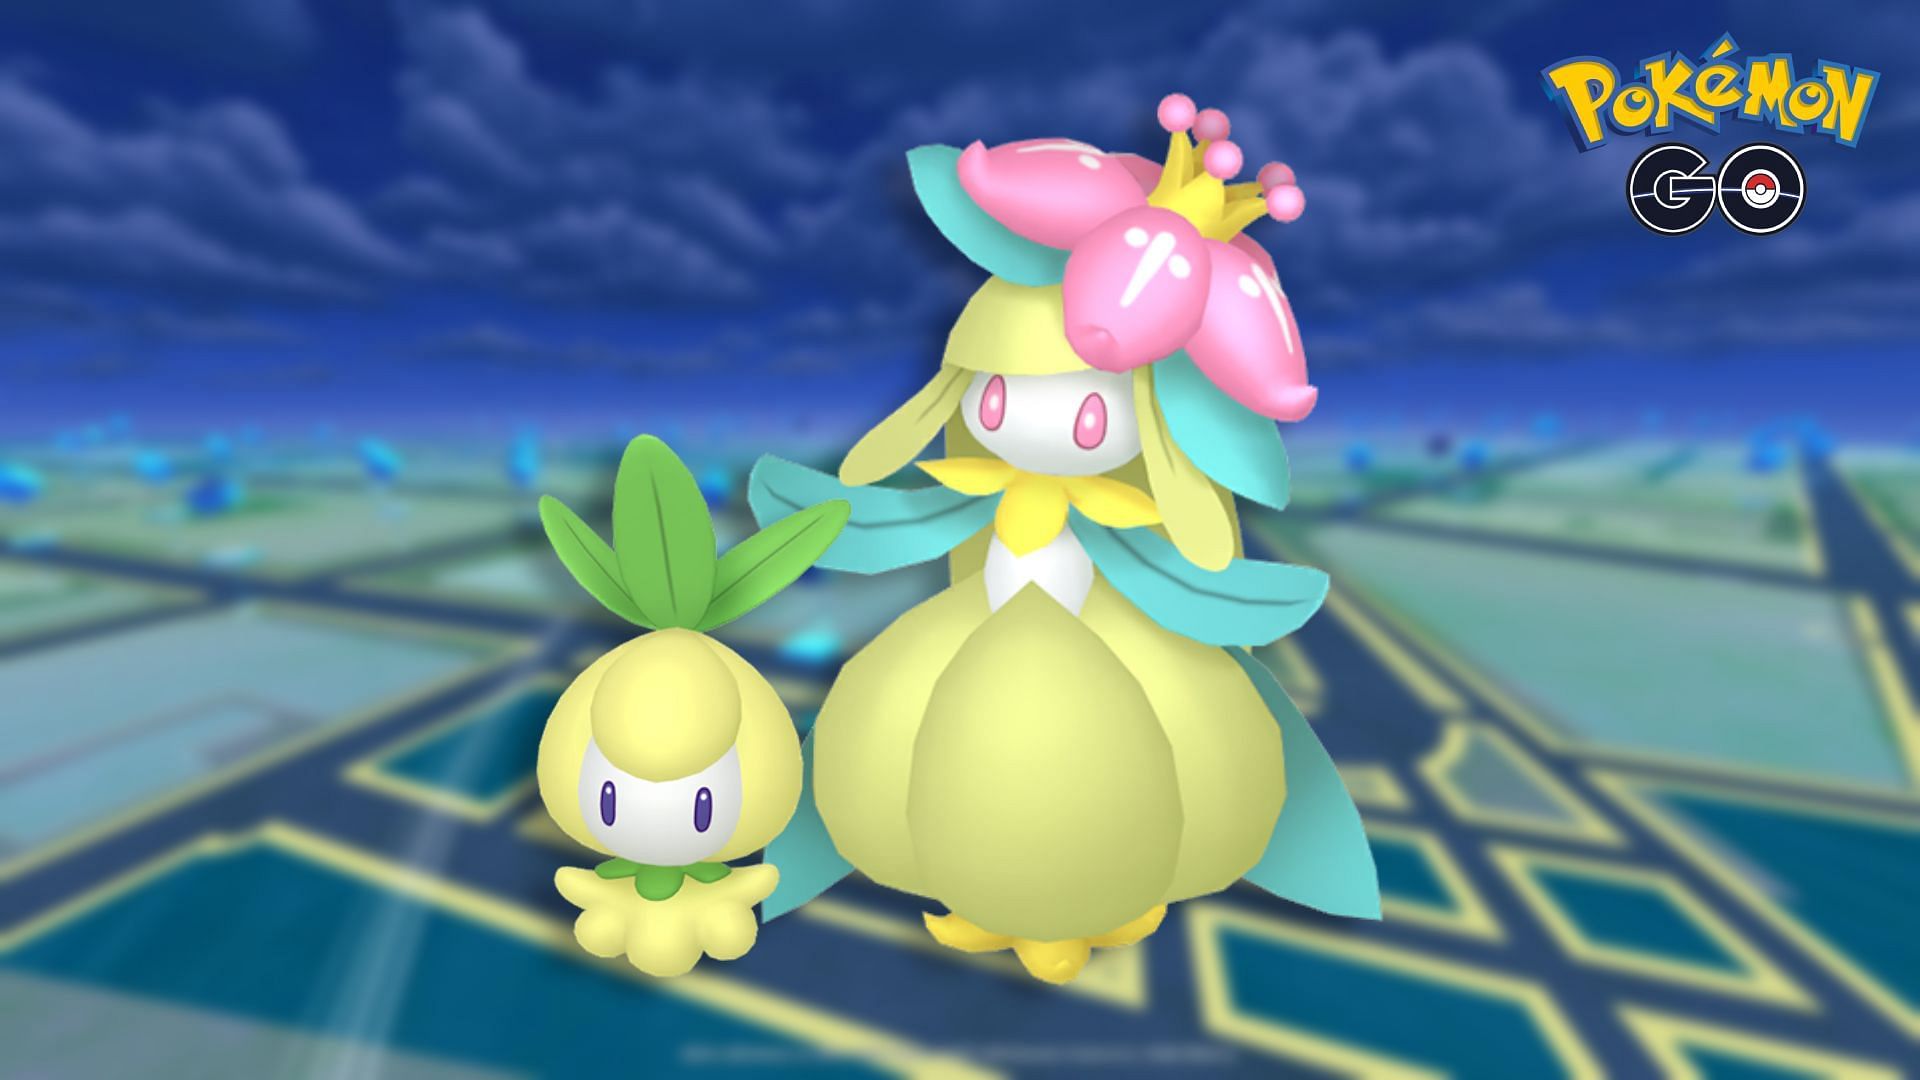 Pokémon GO - Glittering Garden 